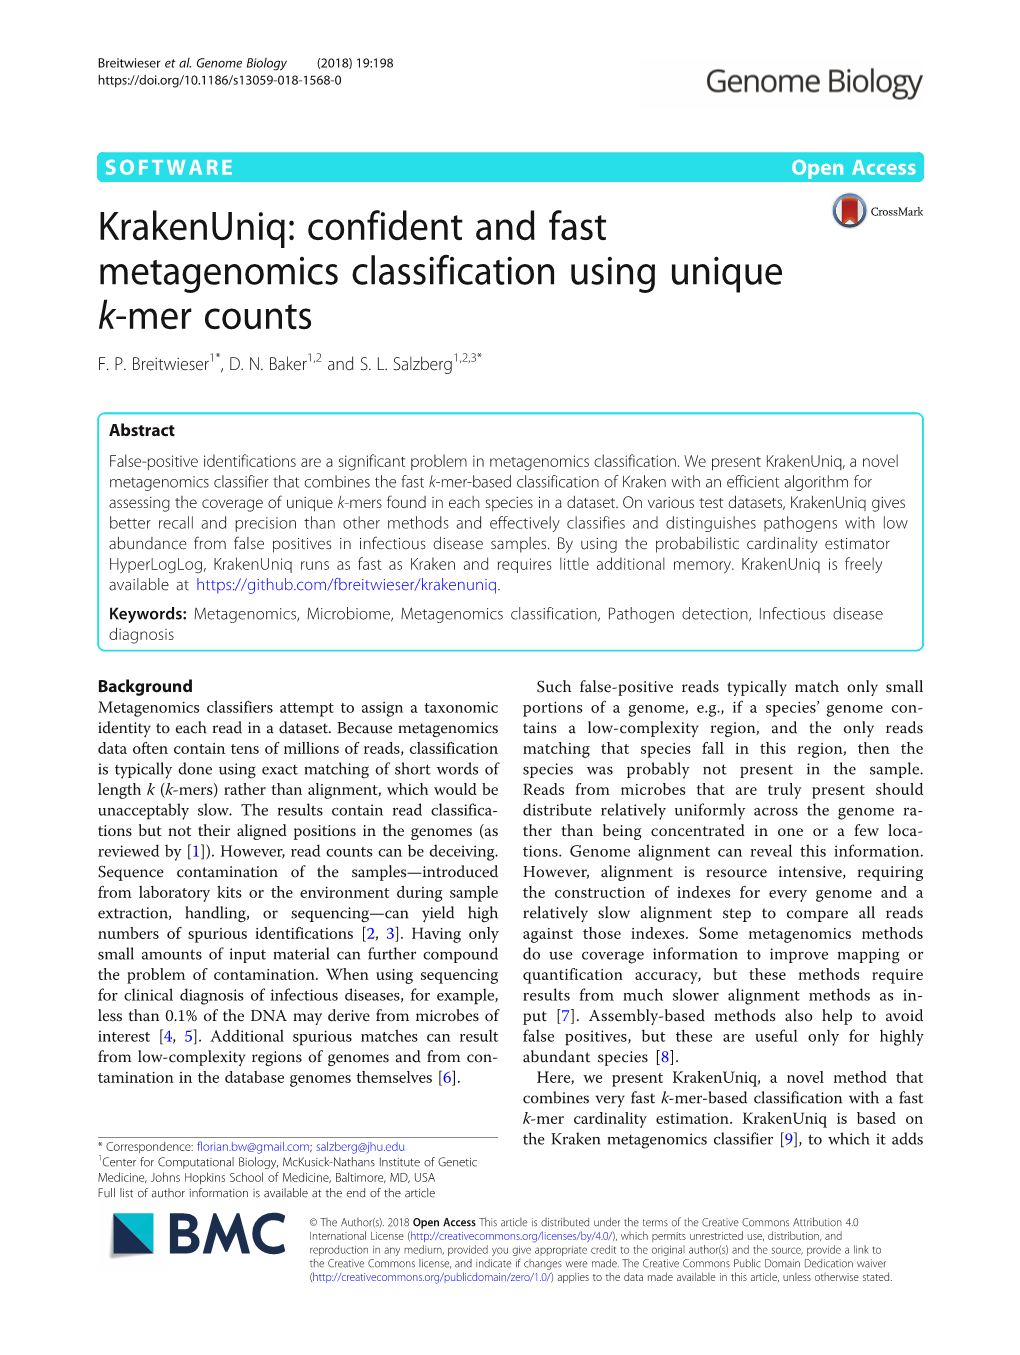 Confident and Fast Metagenomics Classification Using Unique K-Mer Counts F